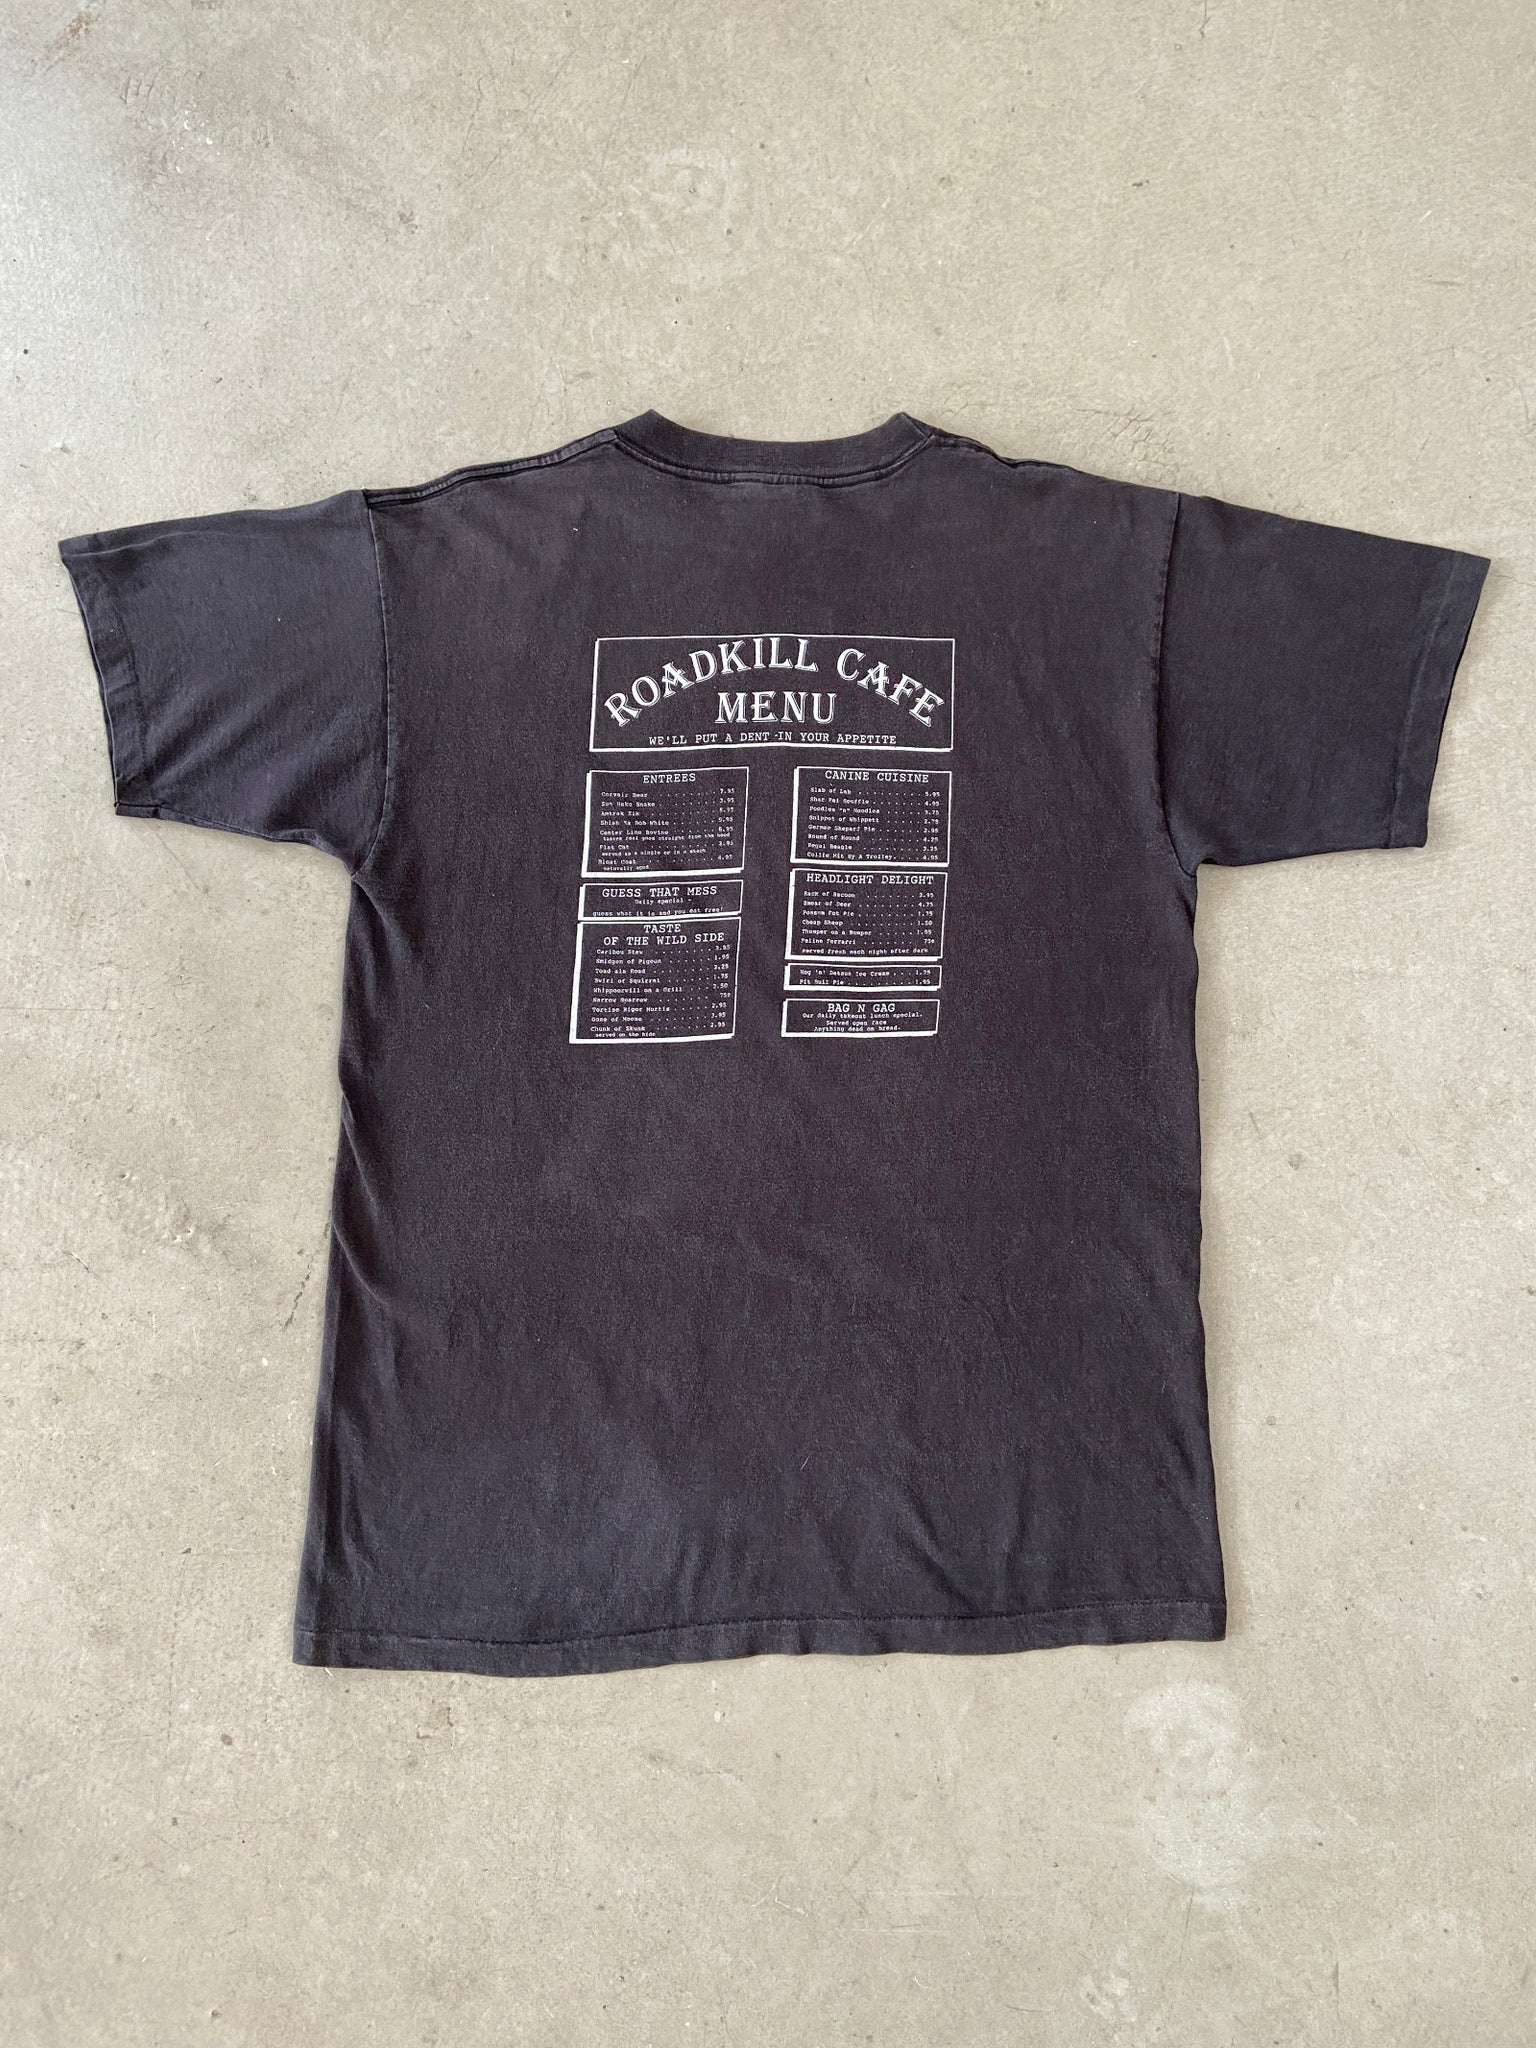 1990's Roadkill Cafe T-Shirt - L